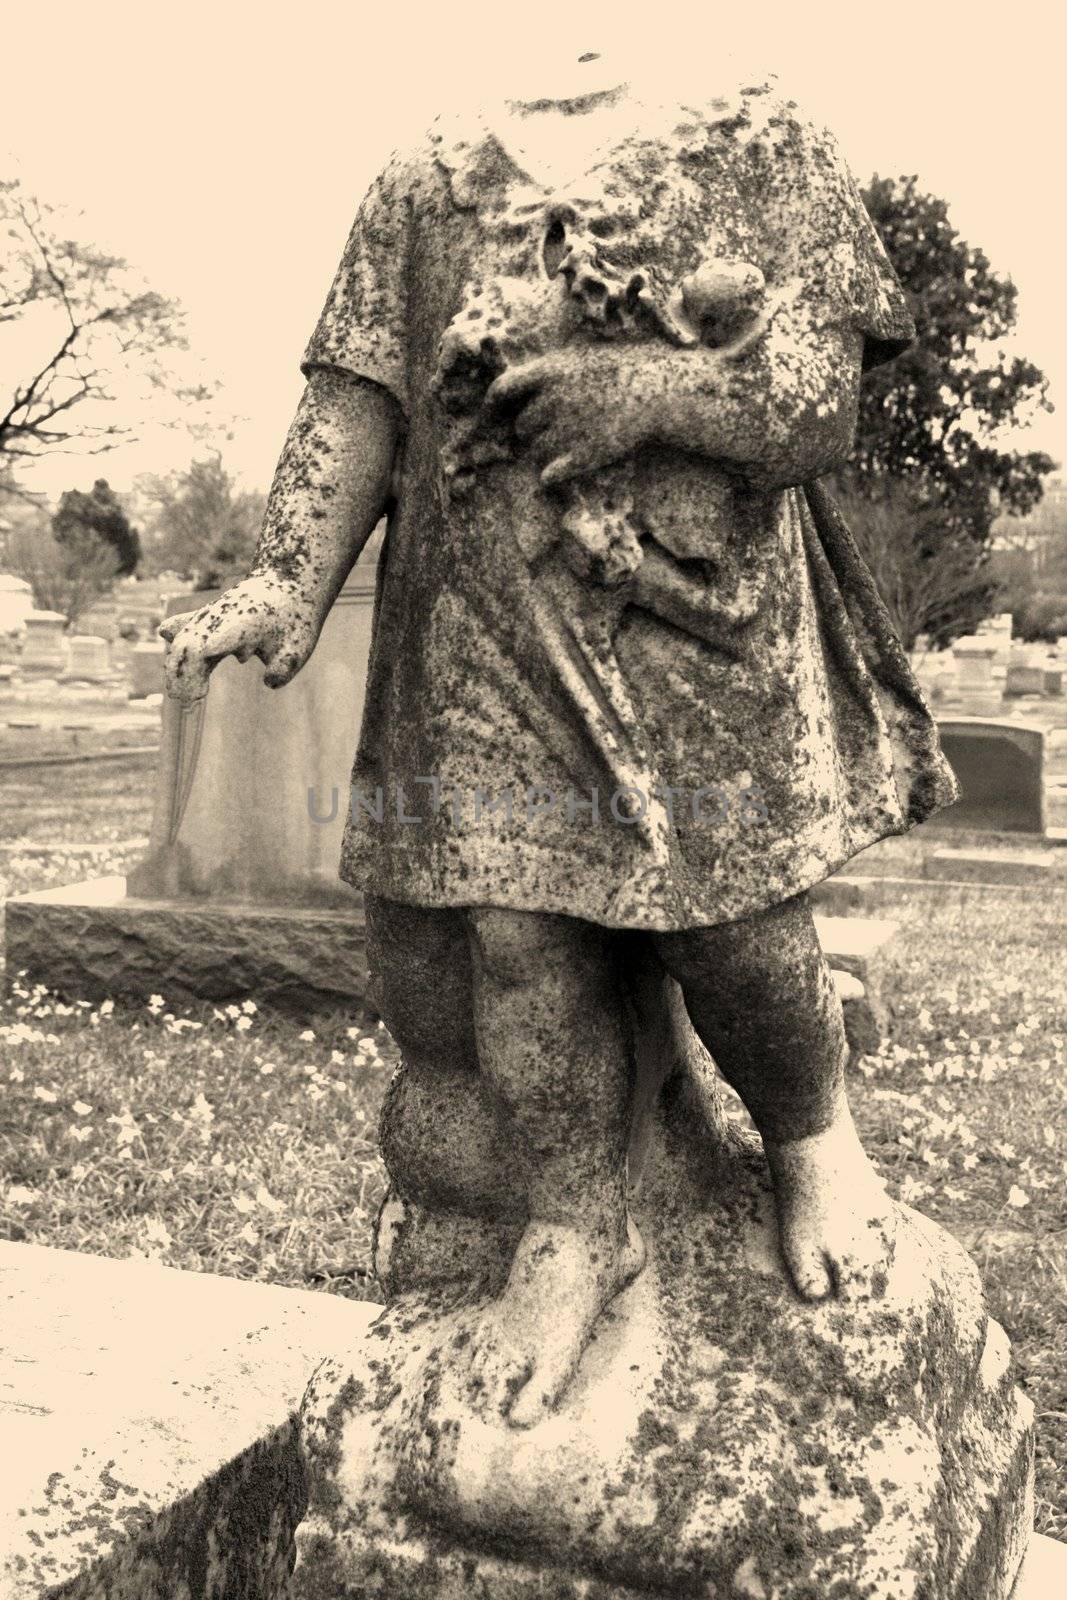 Statue in graveyard of headless cherub.